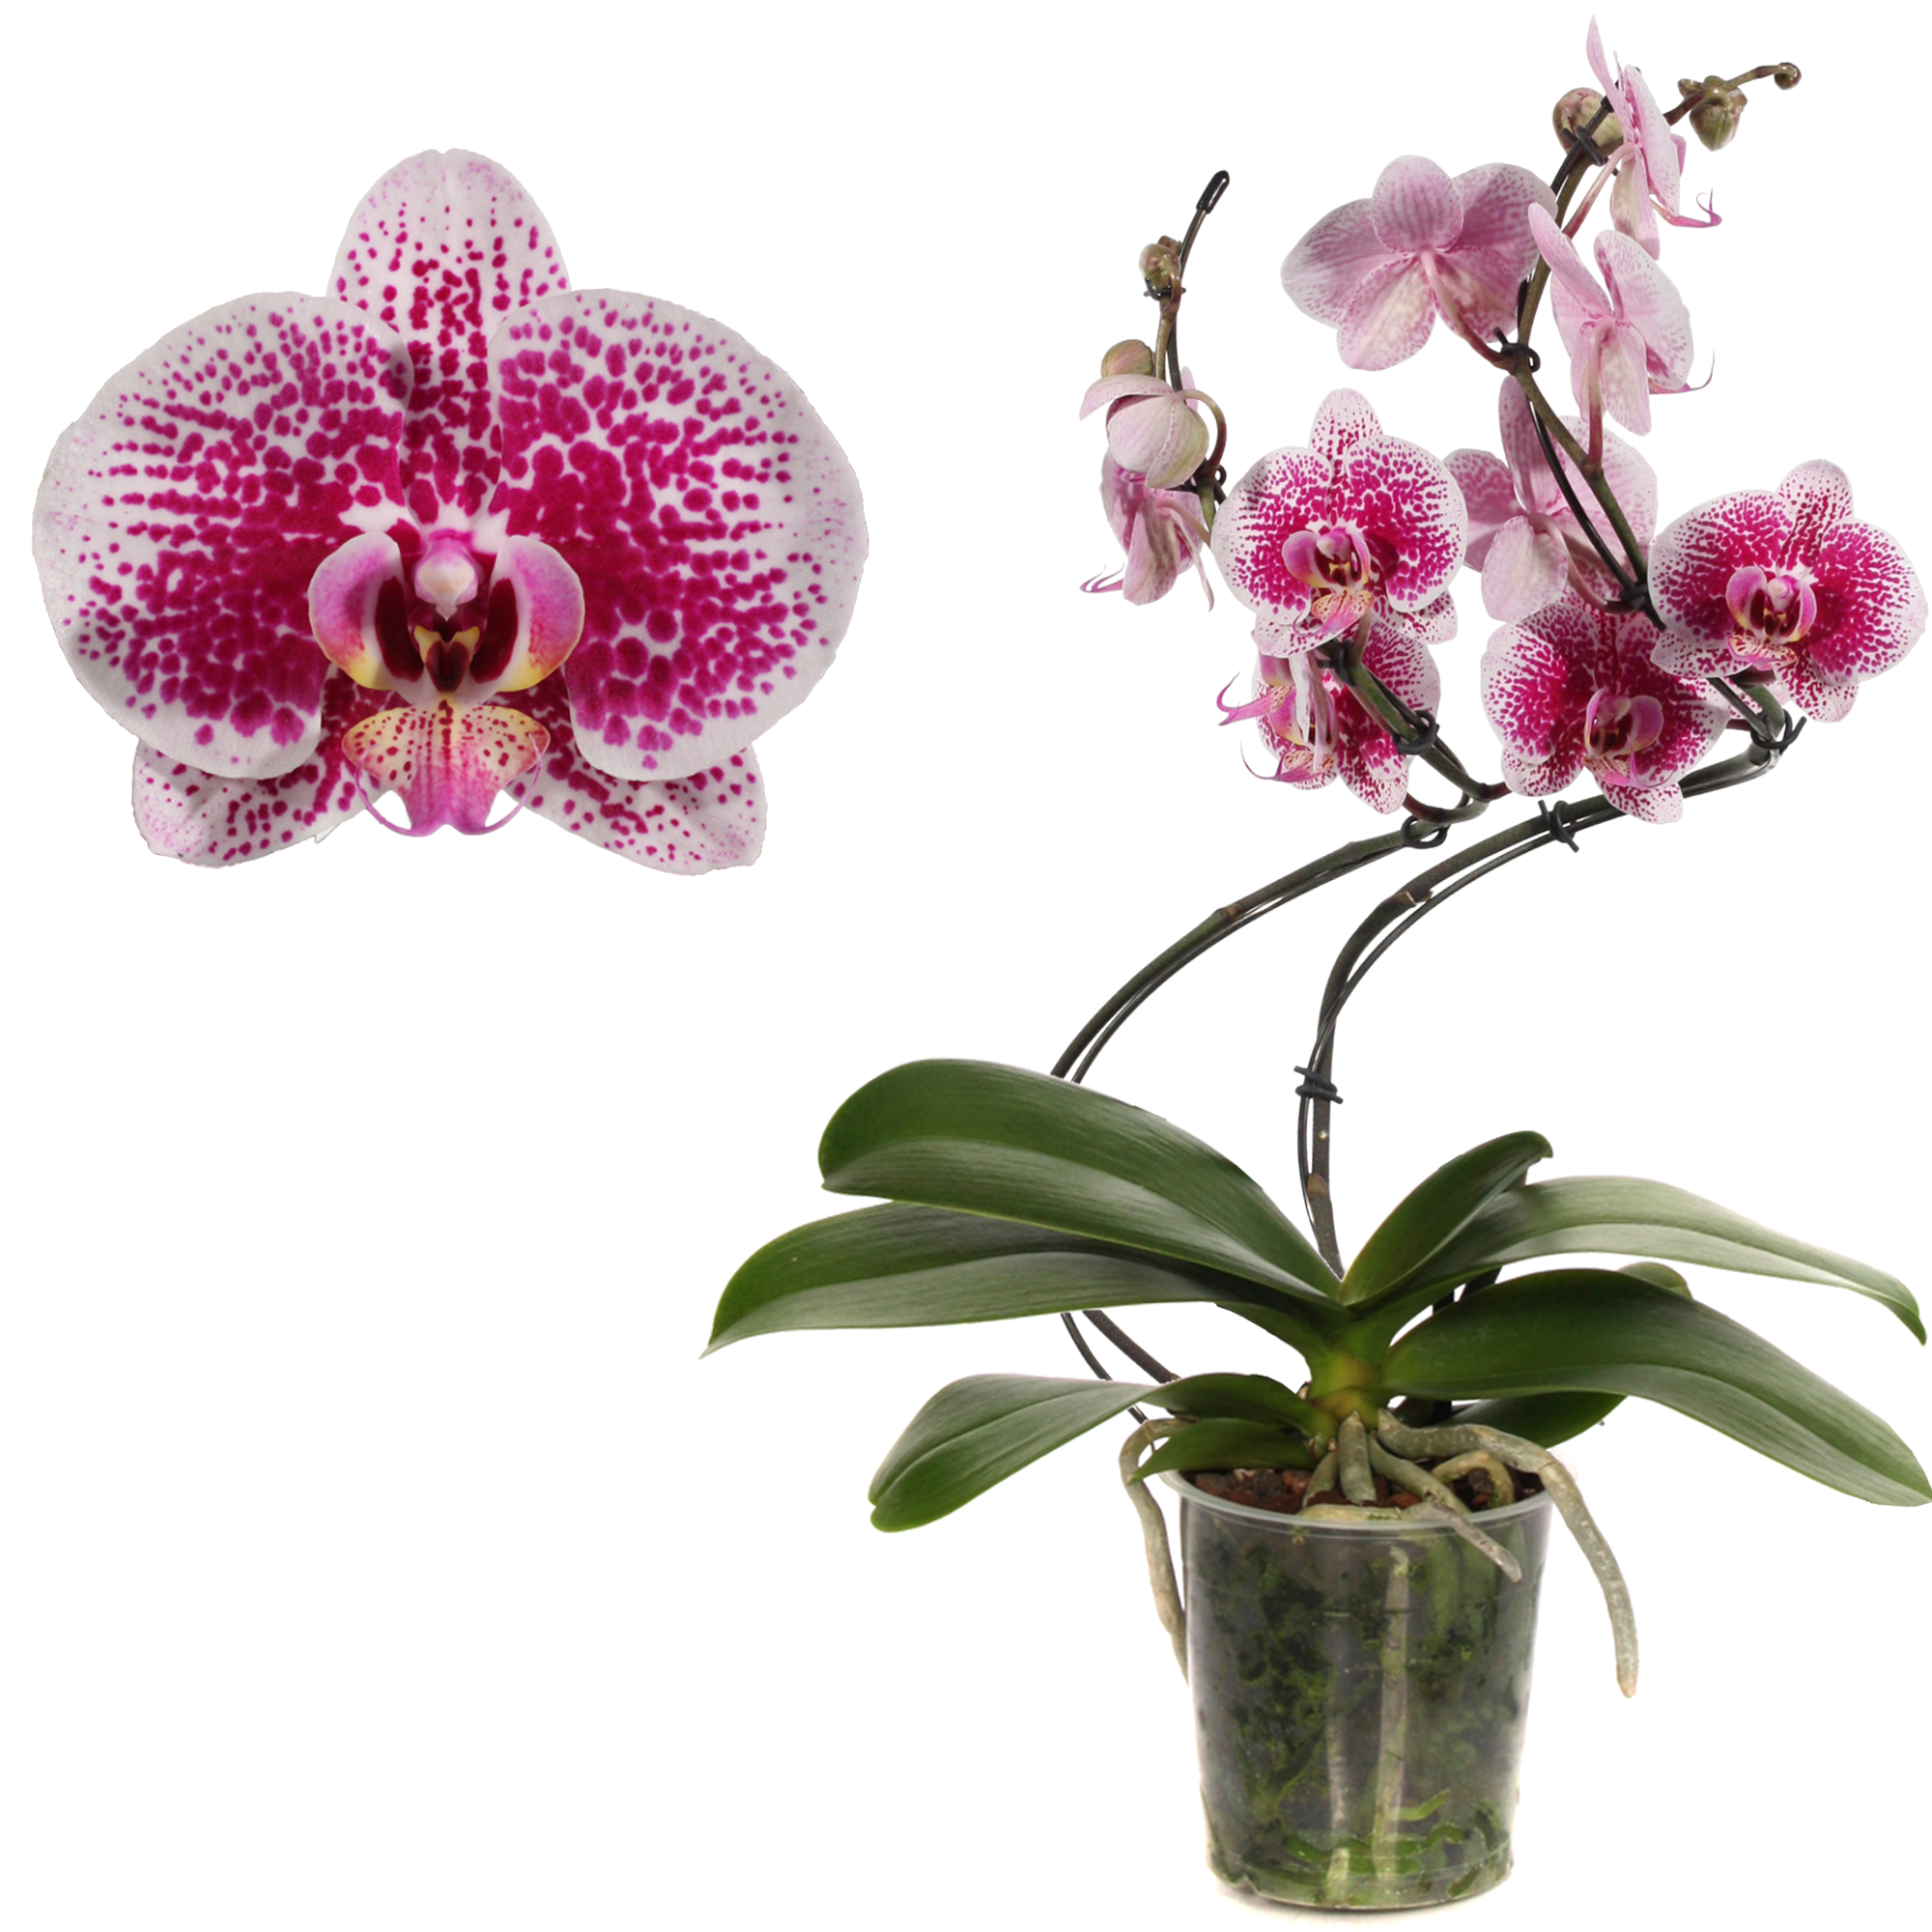 Schmetterlingsorchidee 'Cultivation' 2 Rispen pink, 12 cm Topf + product picture